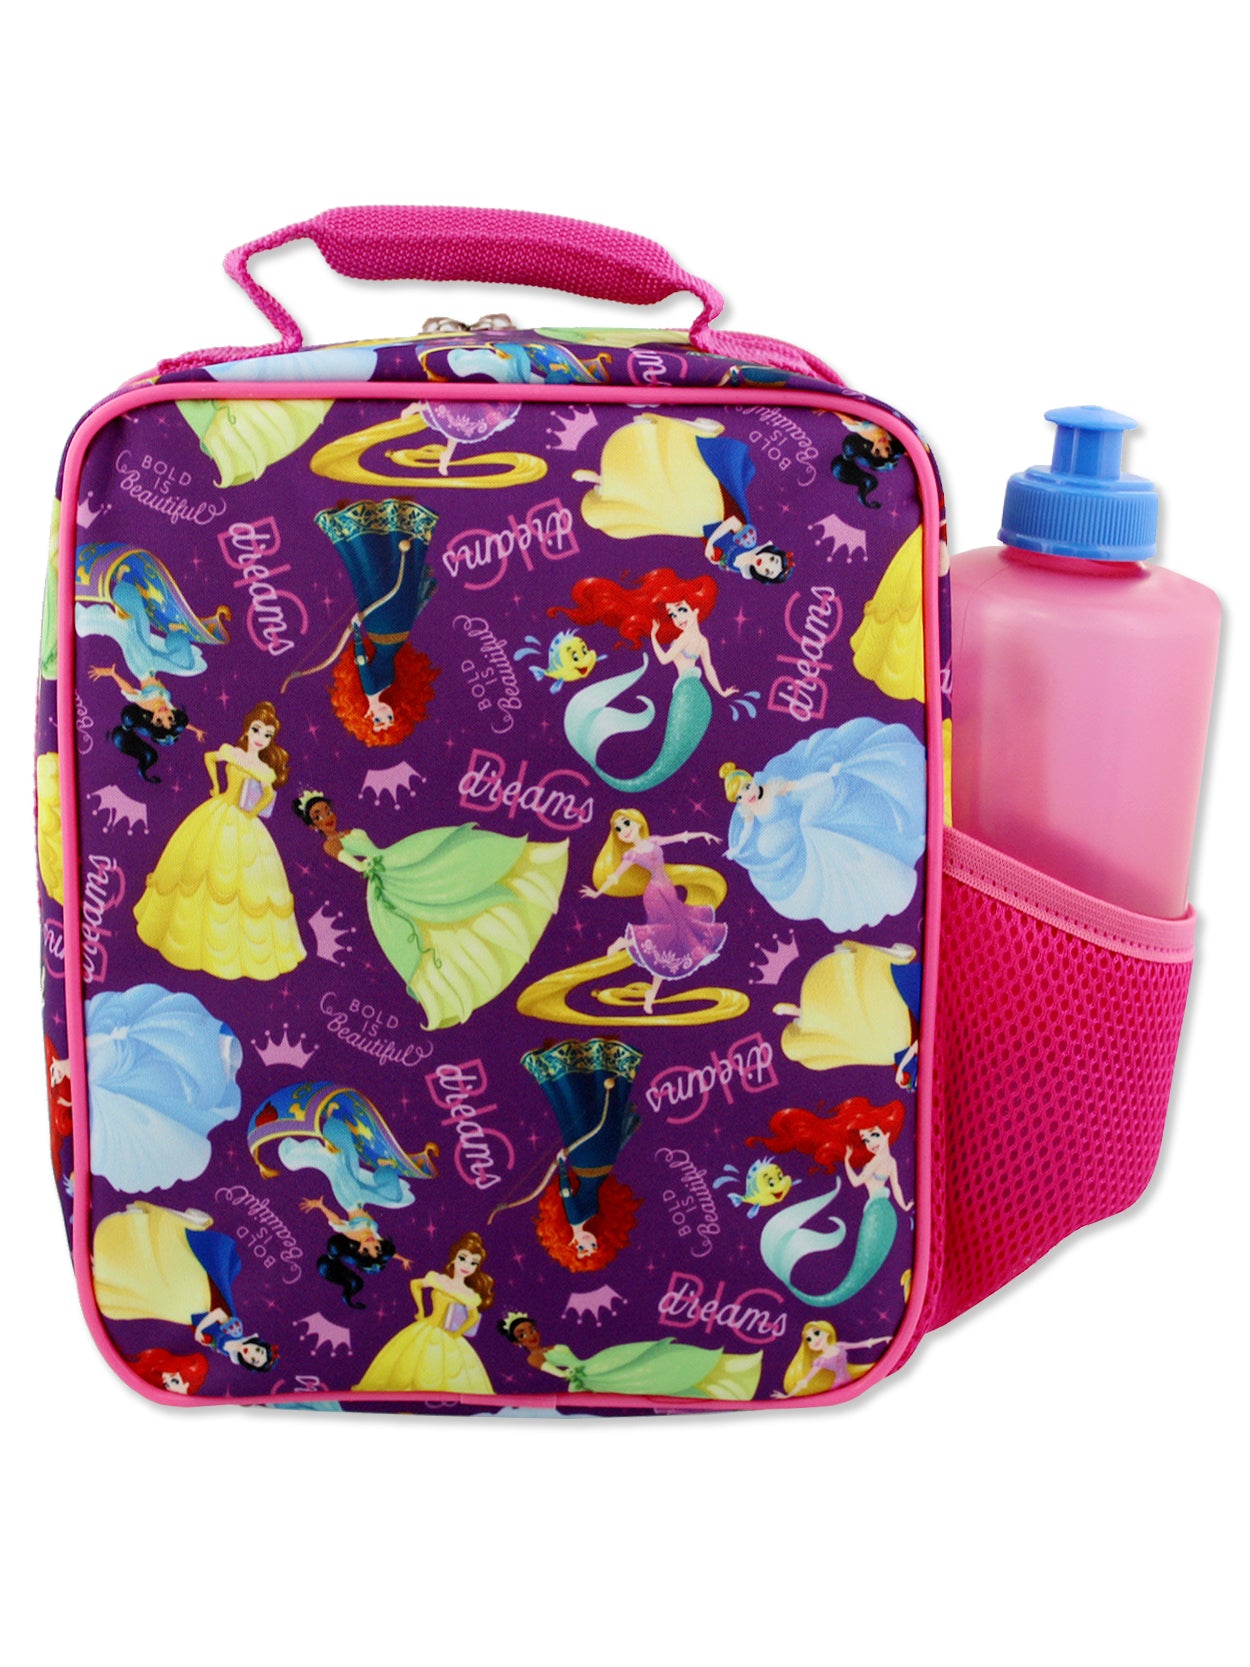 Disney Princesses Lunch Bag Insulated Ariel Cinderella Tiana Belle Girls Pink